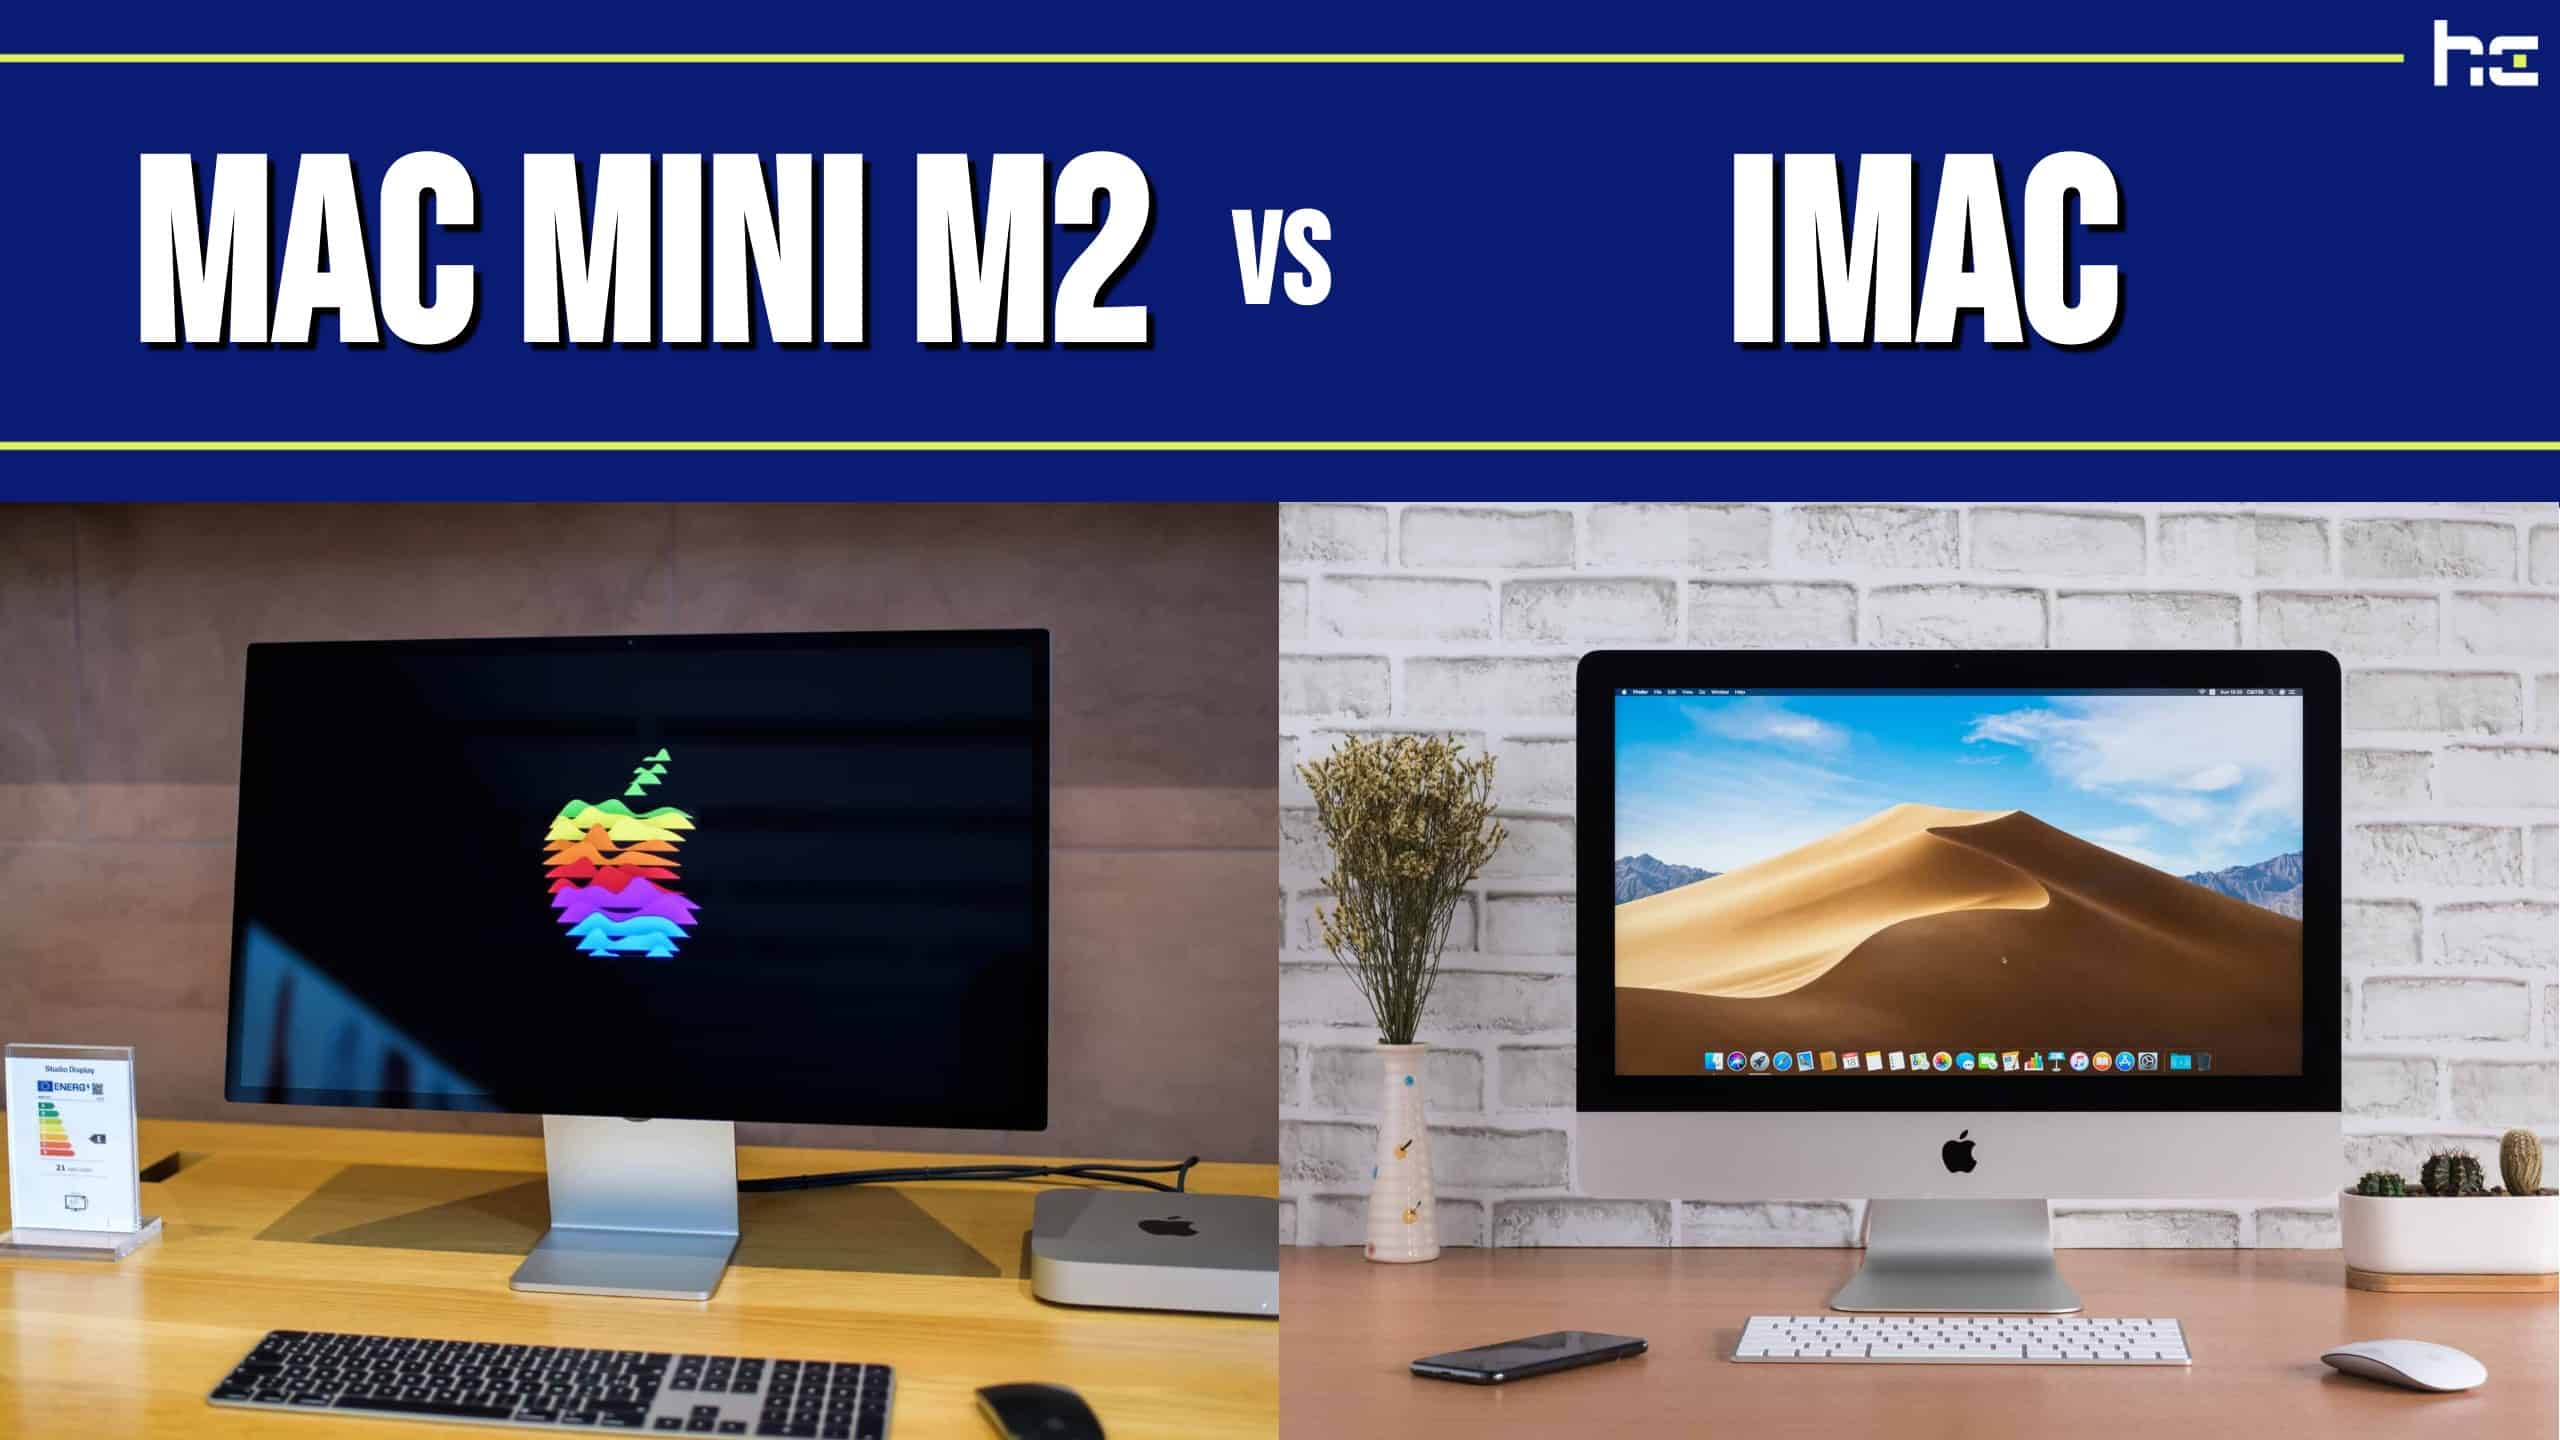 Mac Mini M2 vs iMac featured image